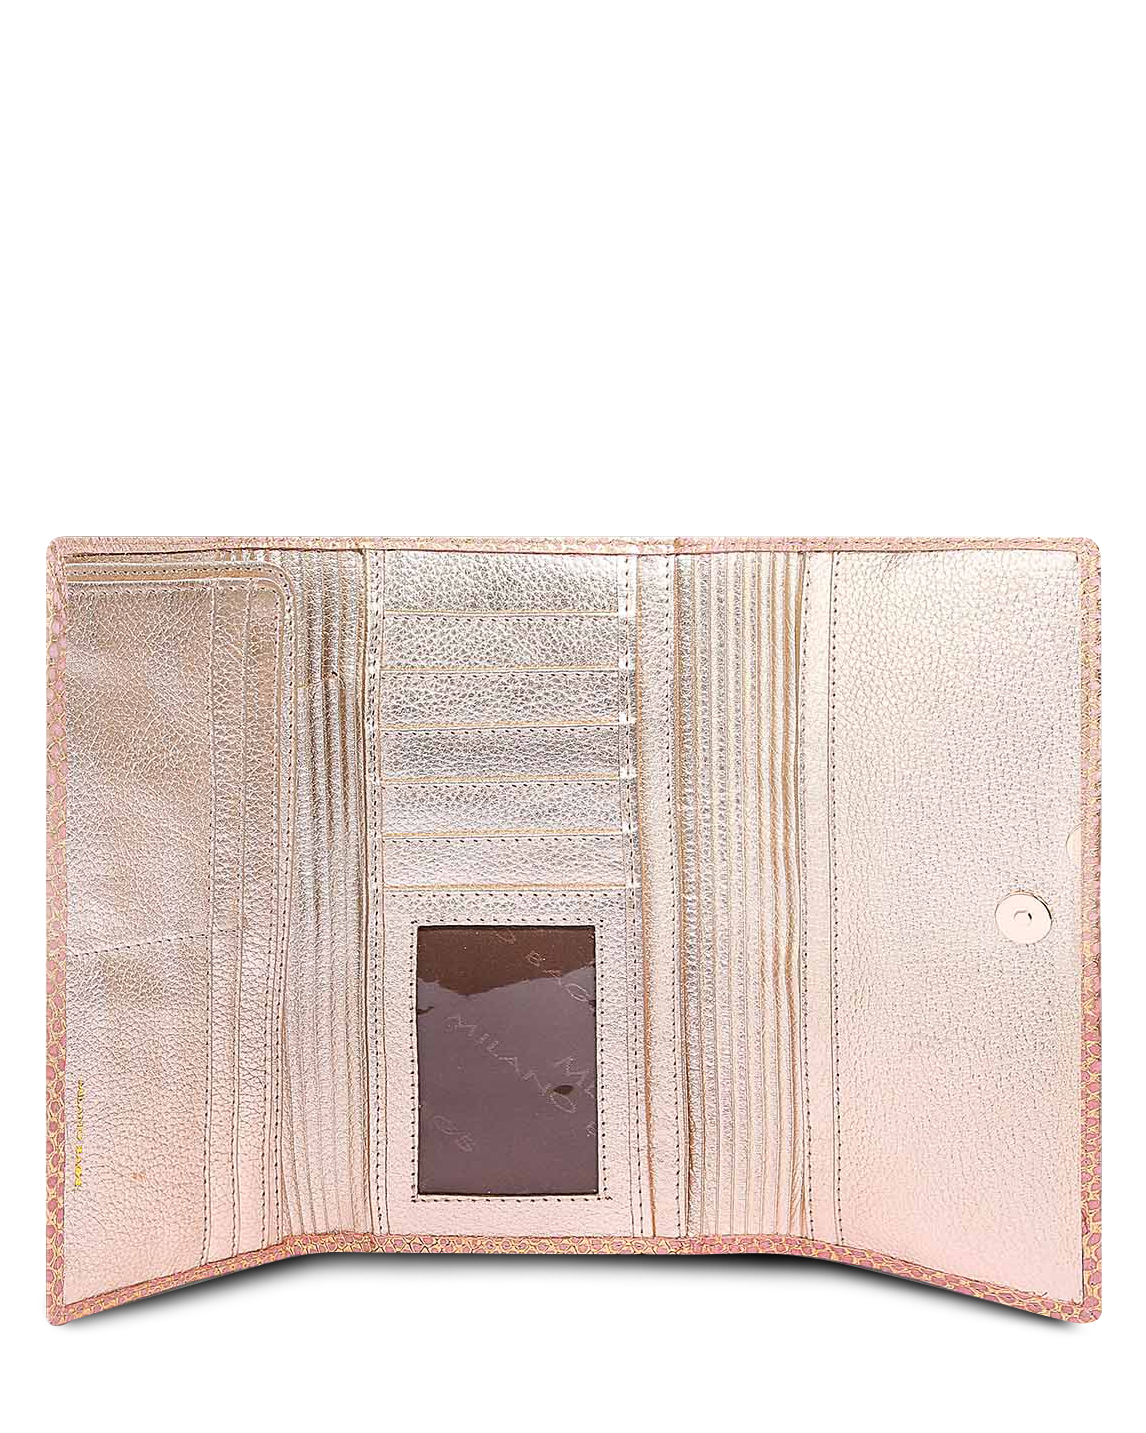 Billetera de Mujer BM-500 Color Rosa